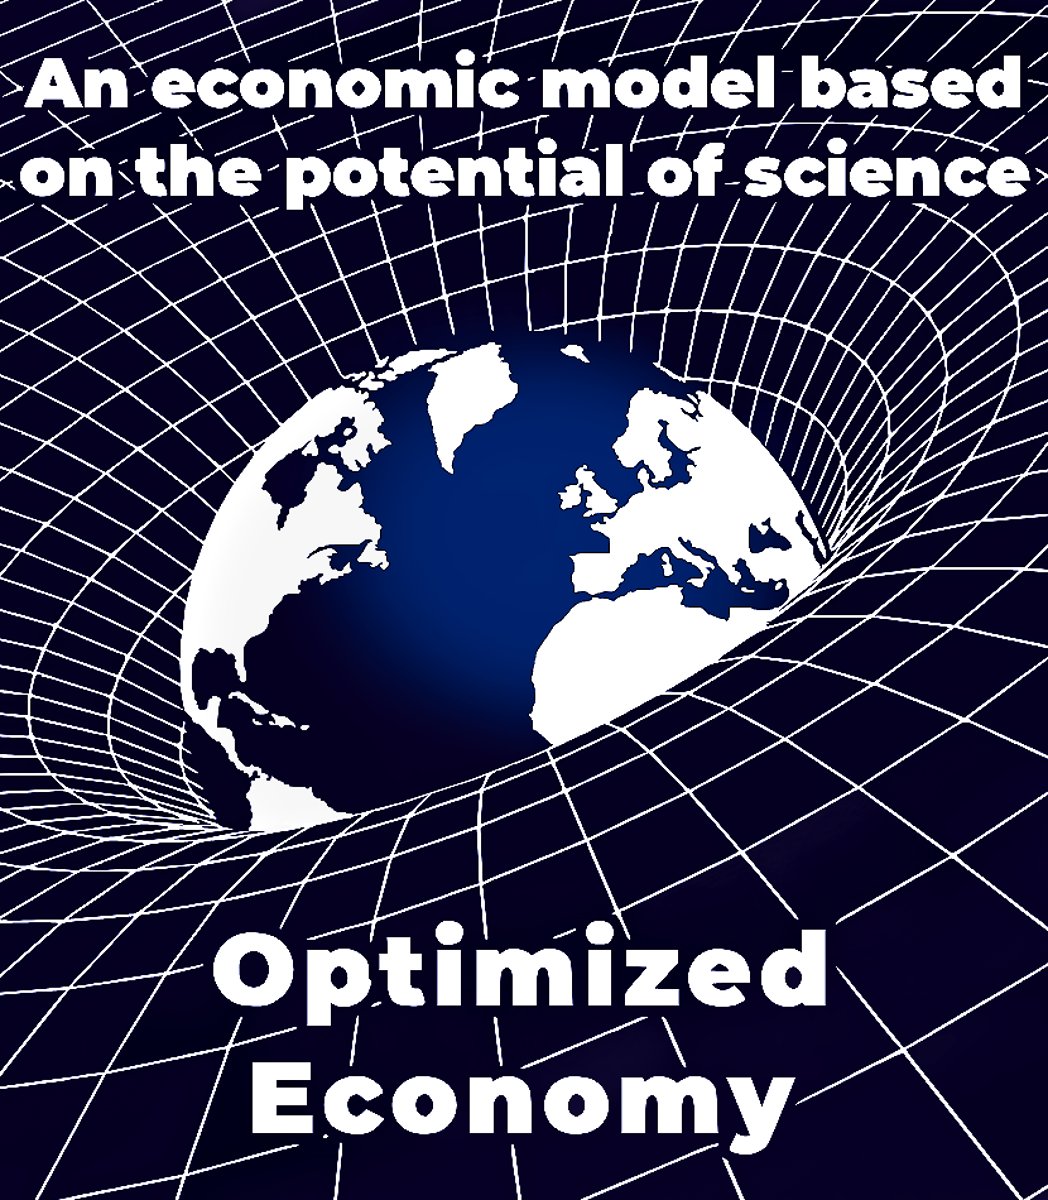 @spelmandiva @TheNextSystem #NextSystemProject
@TheNextSystem 
An economic model based on the potential of science – 
Optimized Economy

A new quality for an entire civilisation
optimizedeconomy.blogspot.com